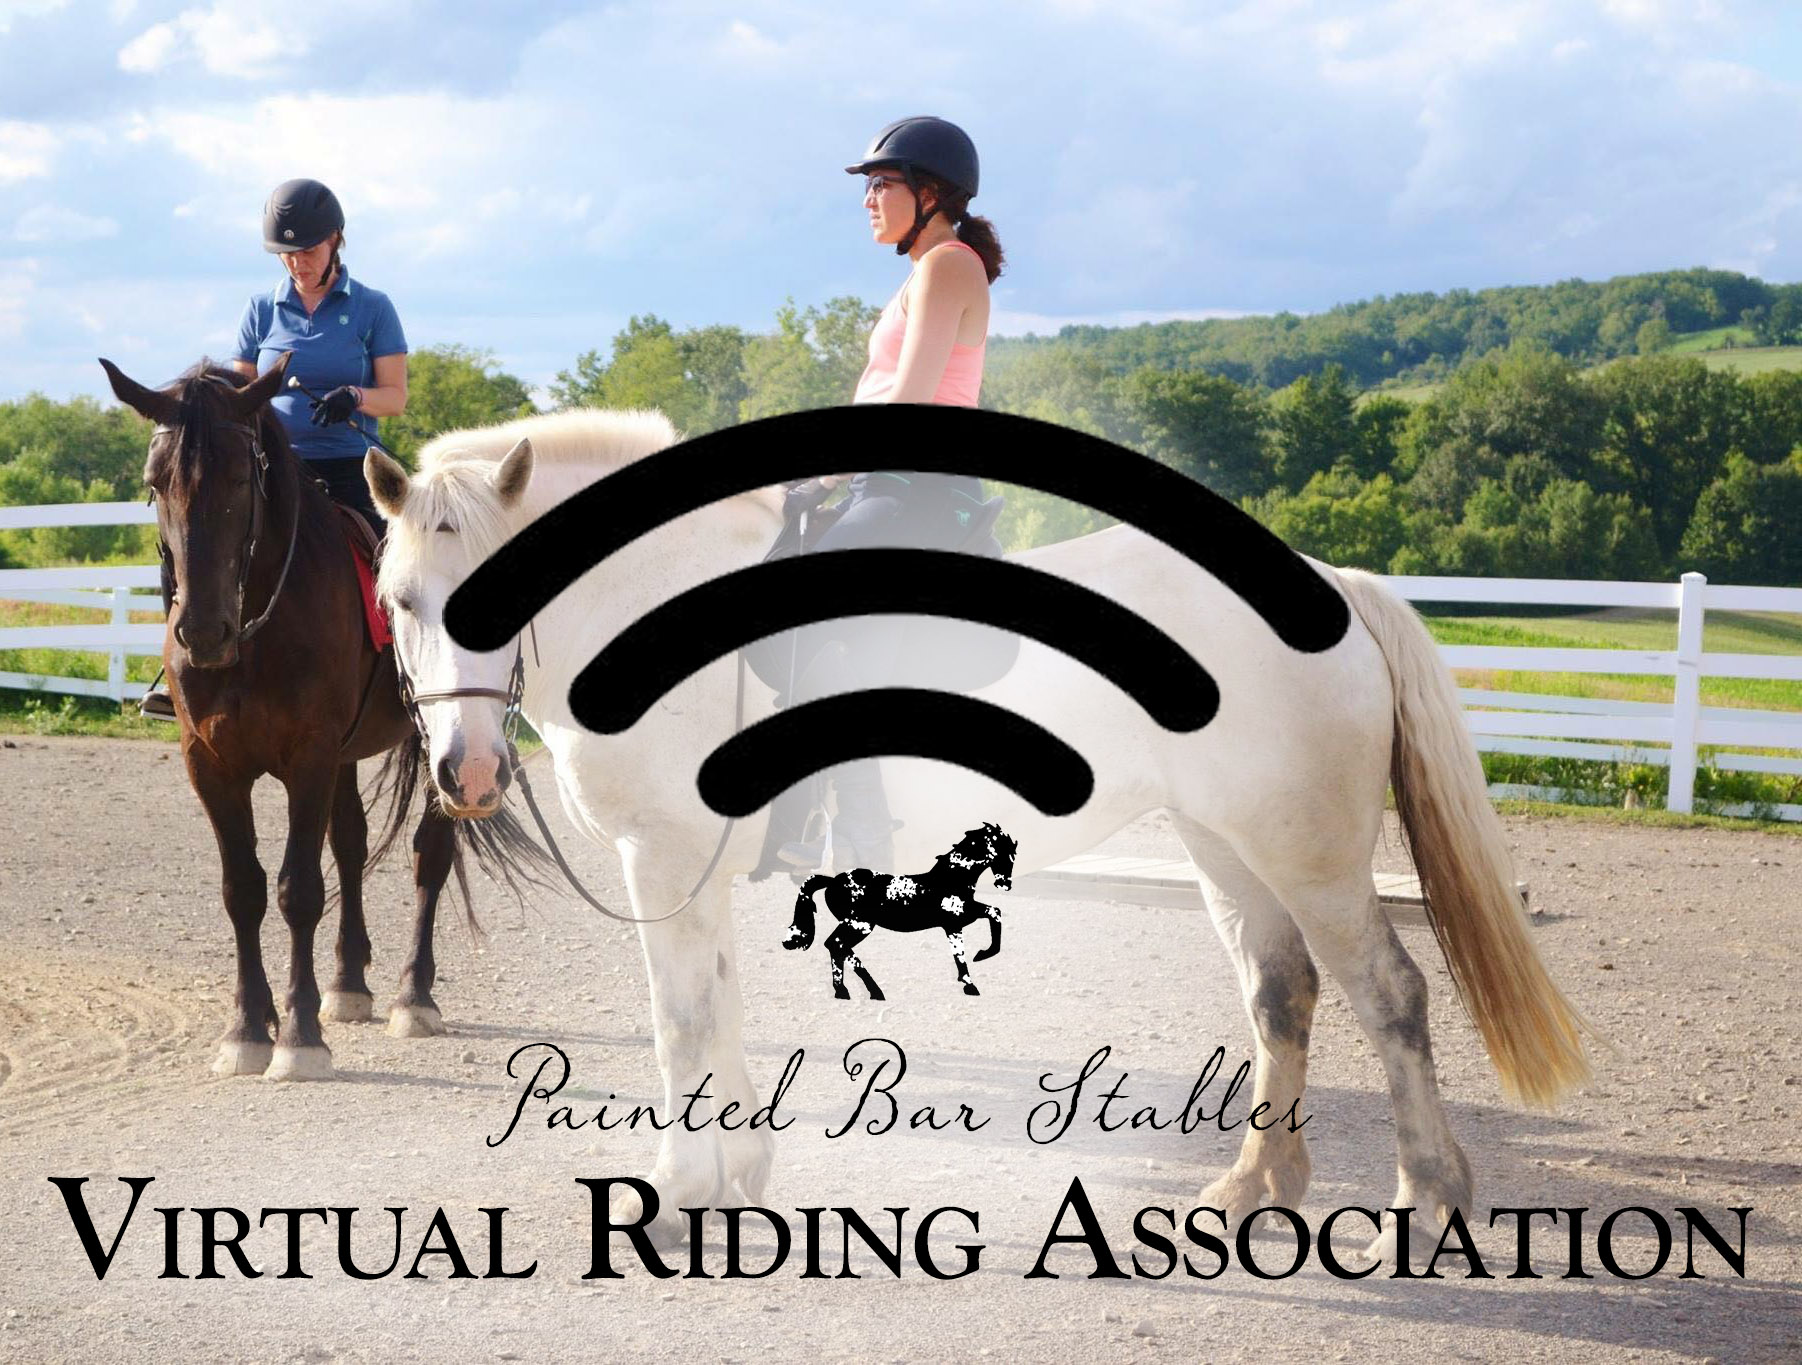 Virtual Riding Association at Painted Bar Stables